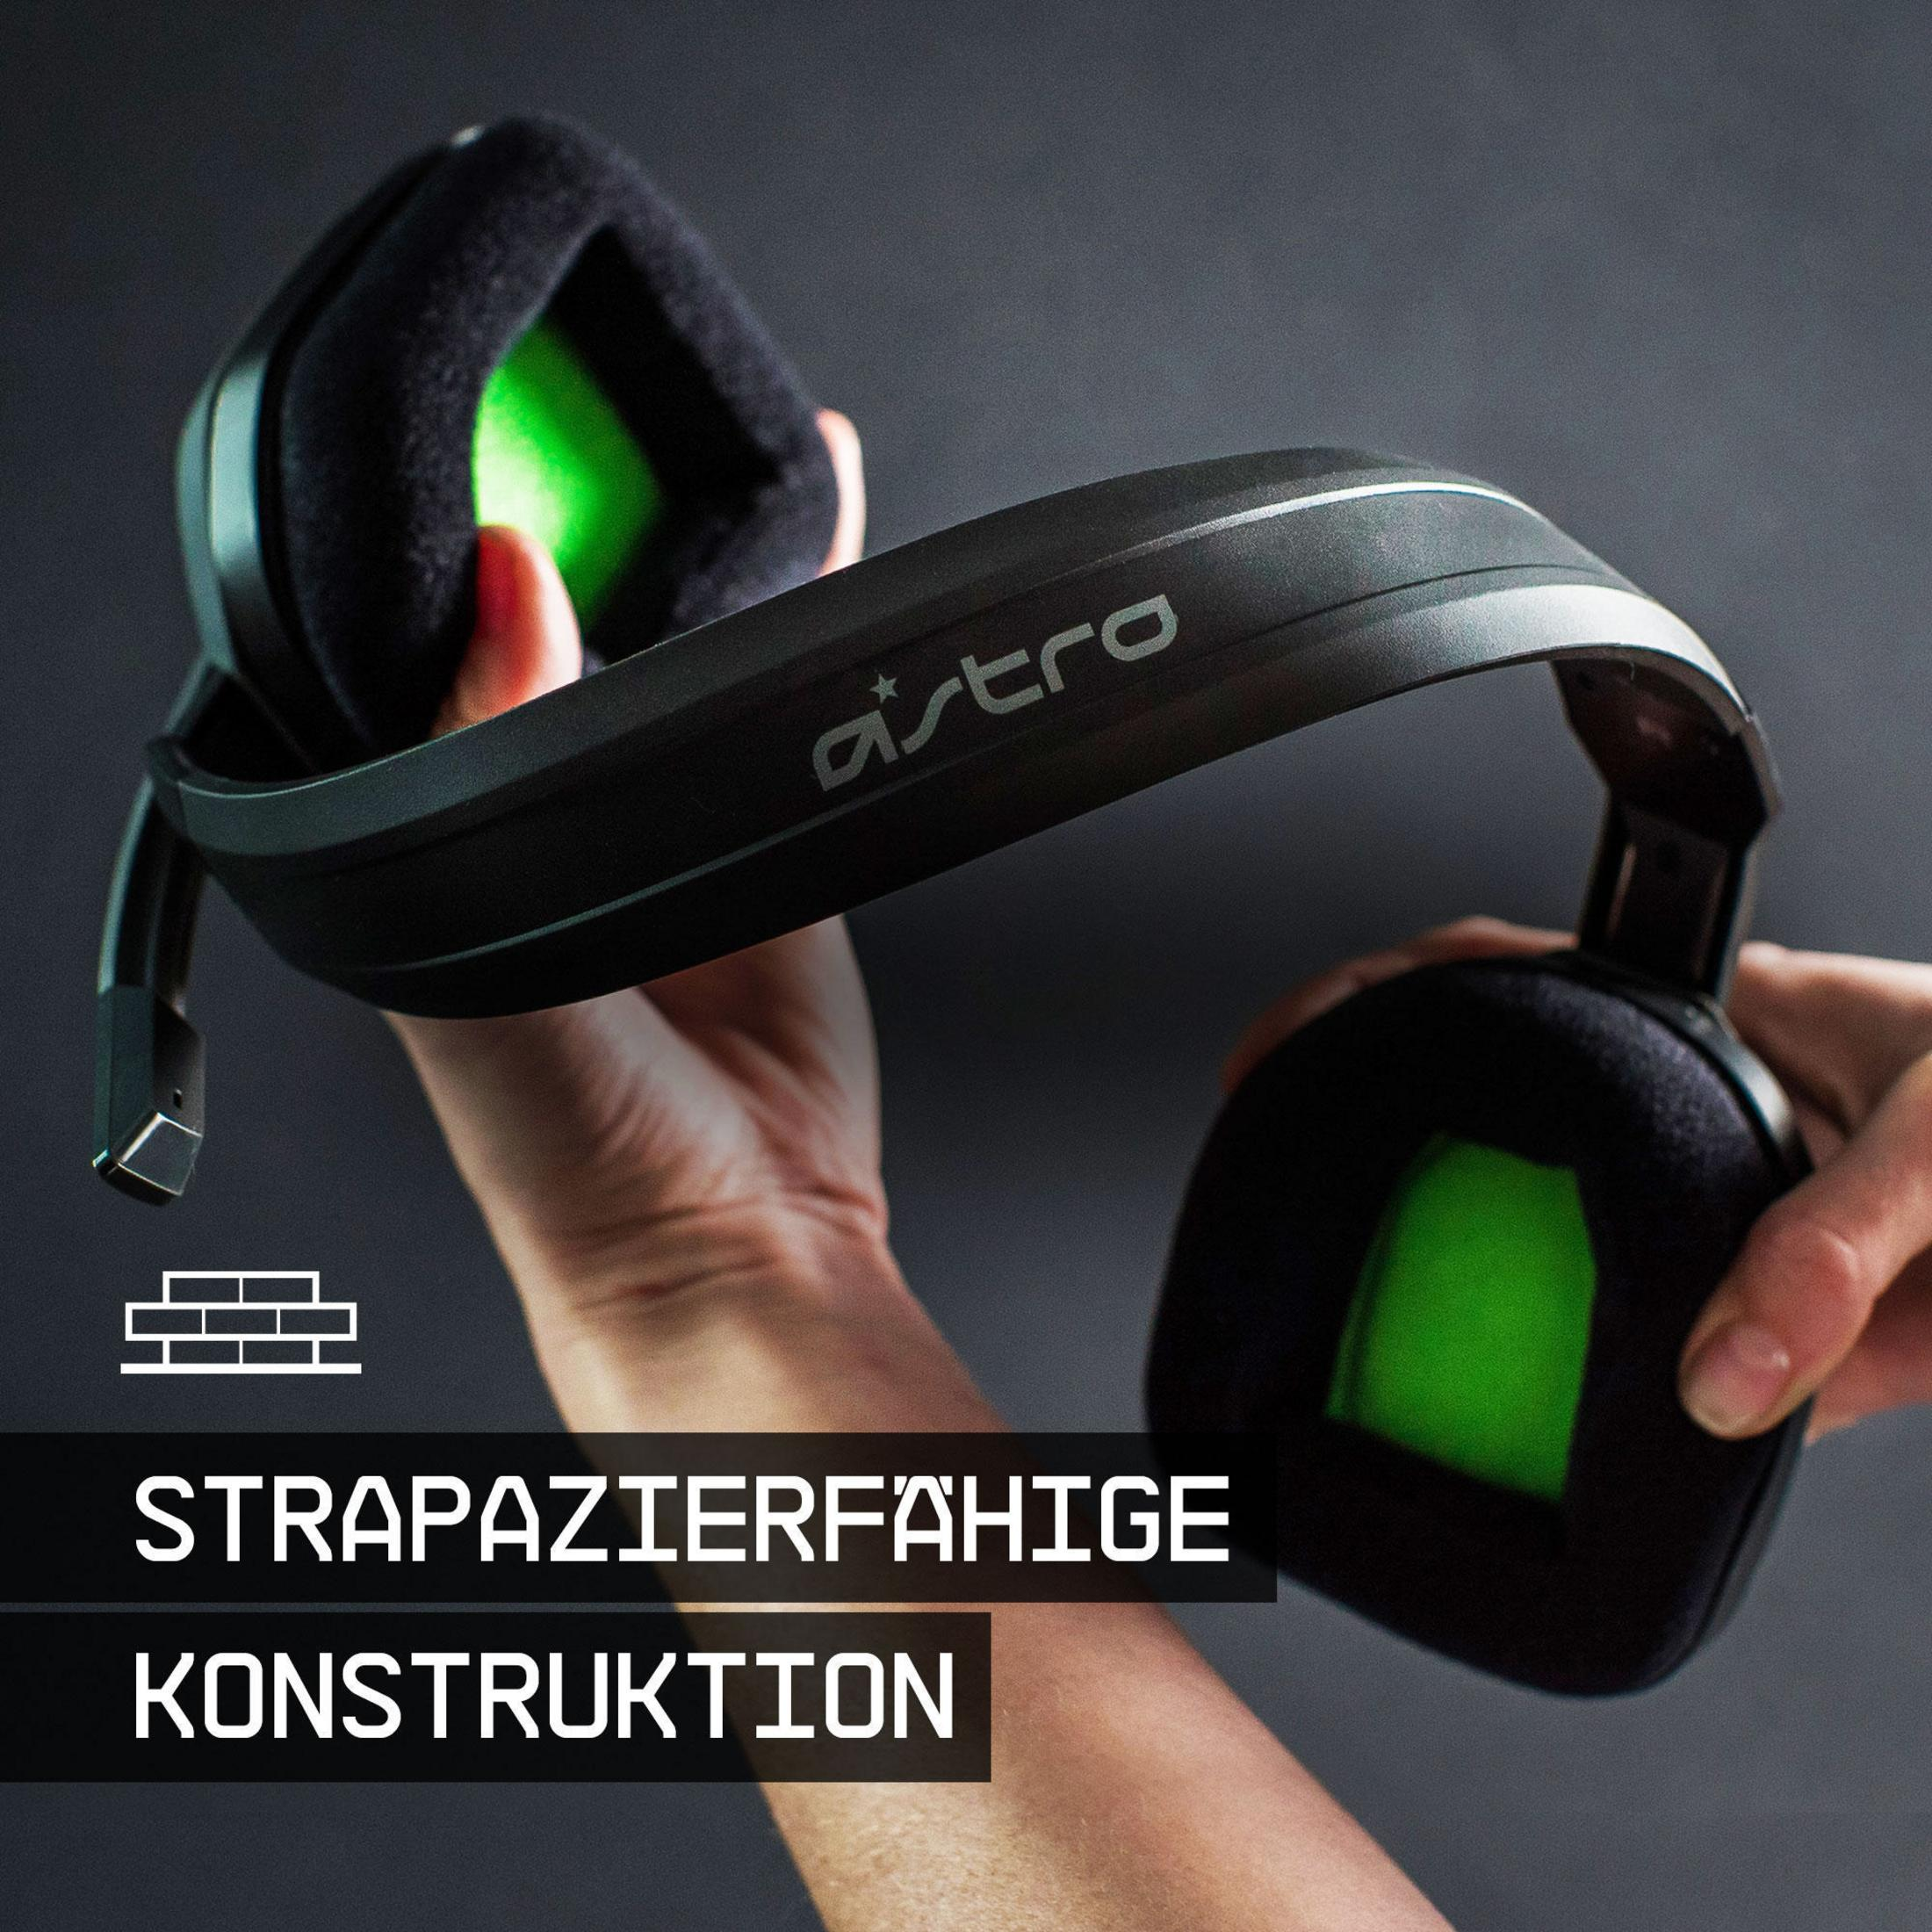 Over-ear FOR Headset Grau/Grün A10 ASTRO XB1 939-001532 HEADSET Gaming GREY/GREEN,